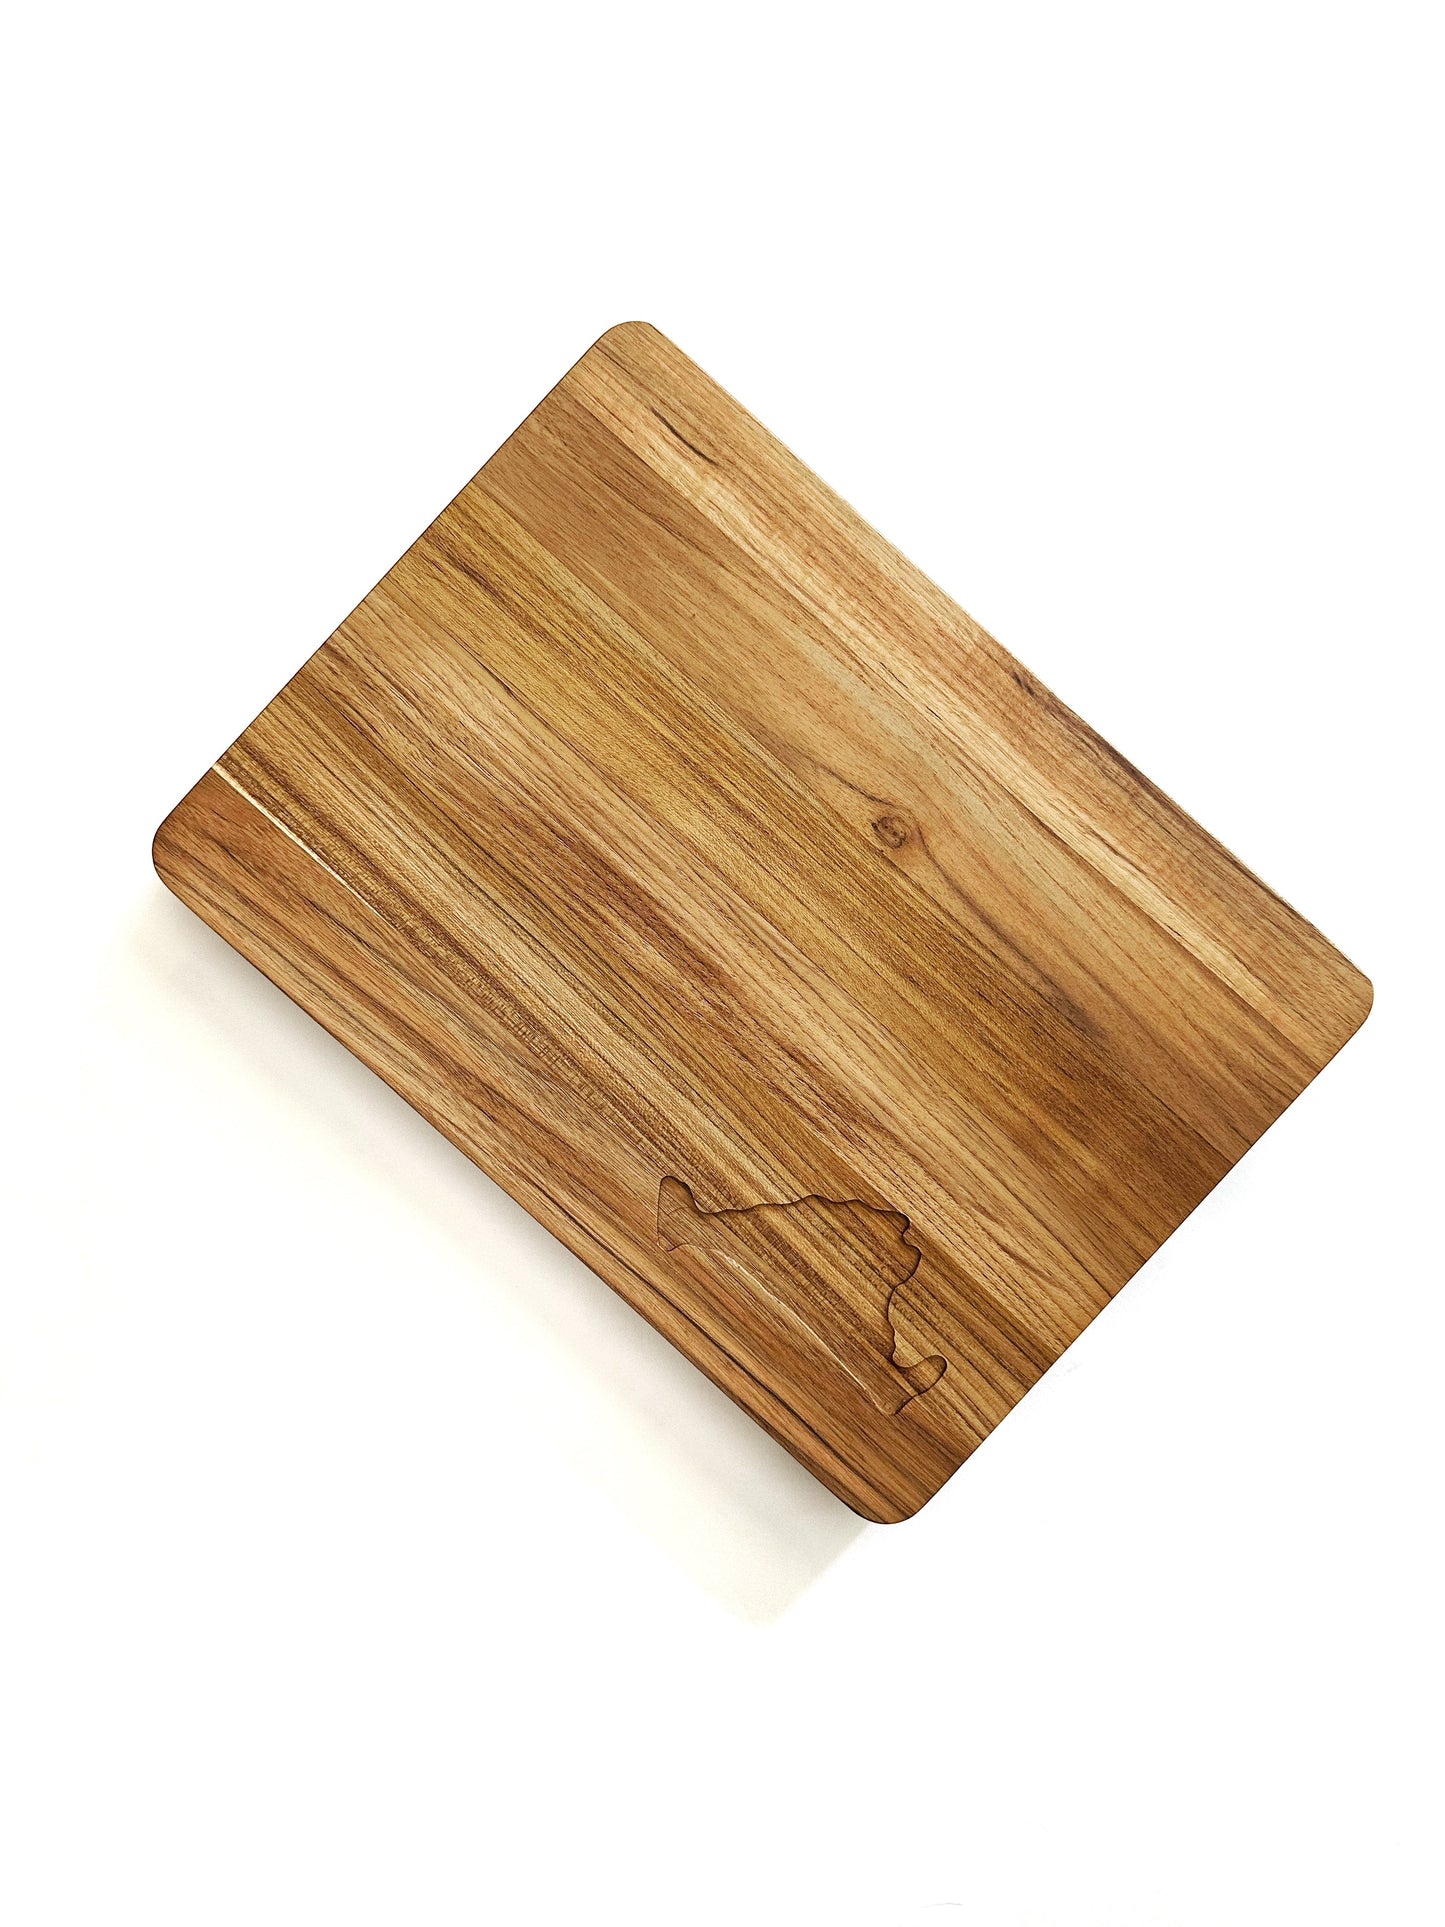 Teakwood cutting board with the Martha's Vineyard shape engraved on the corner